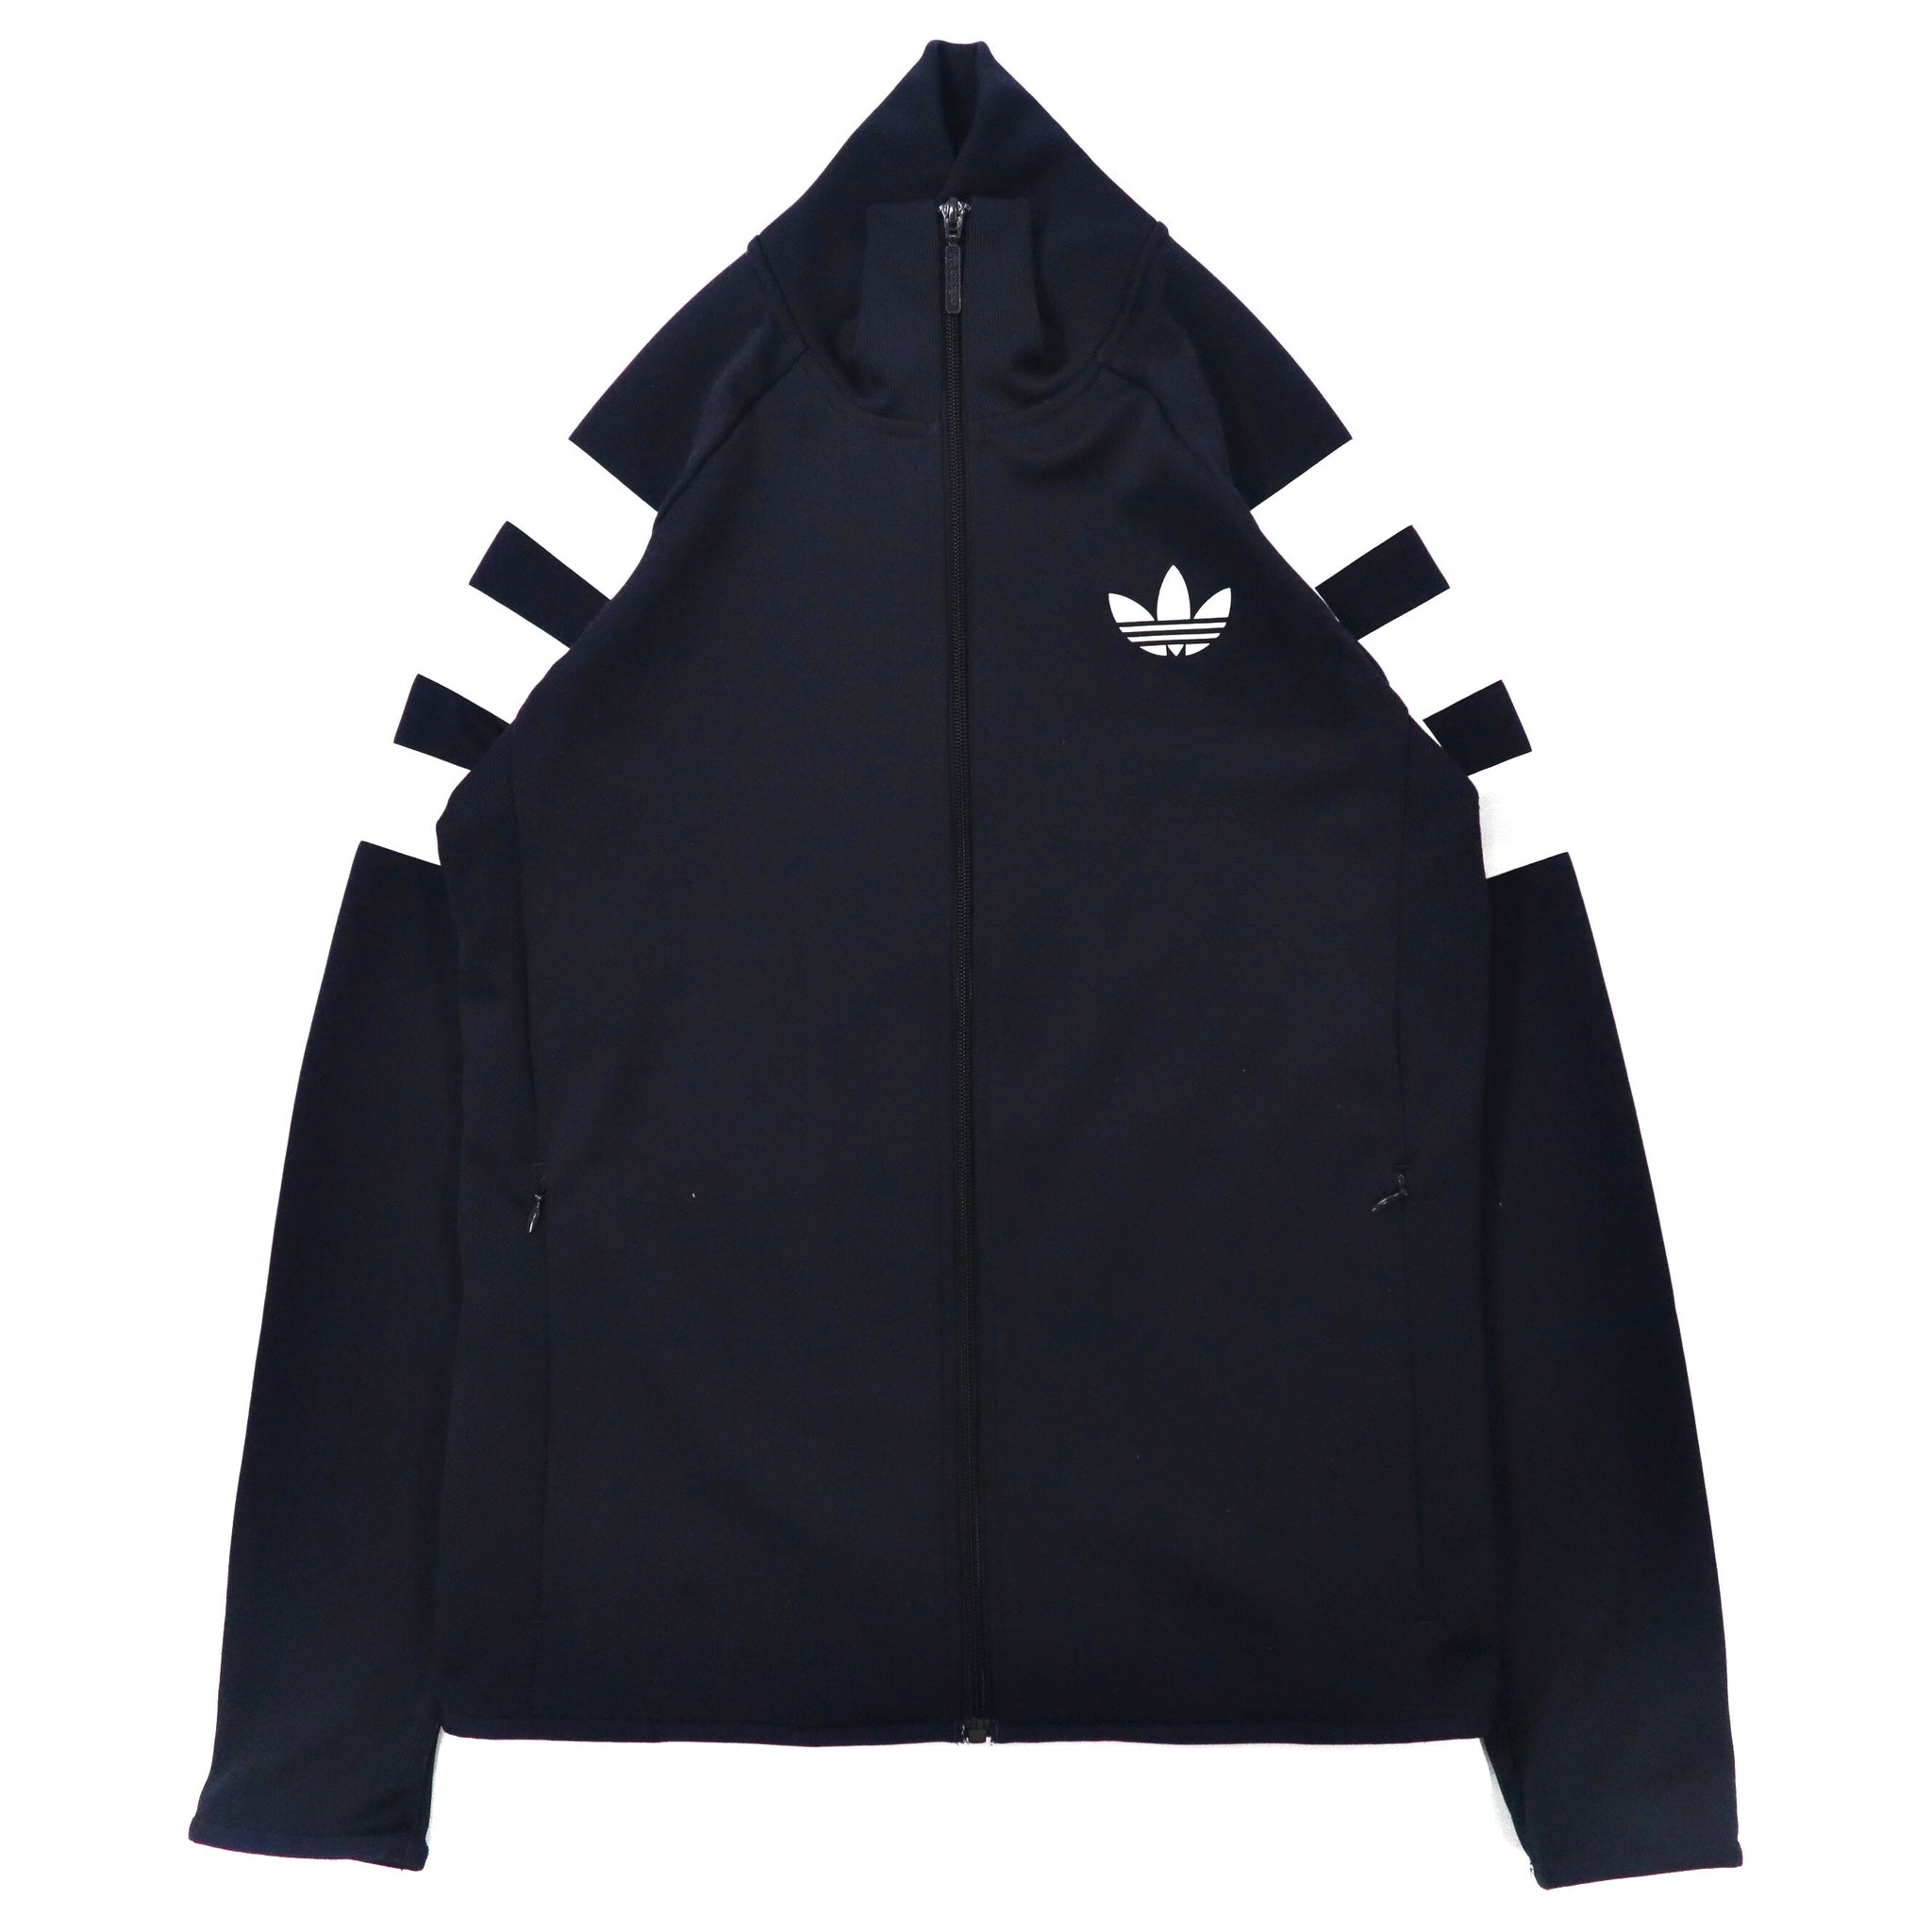 Adidas Originals Track Jacket Jersey 95 Navy Poliester 3 Striped 